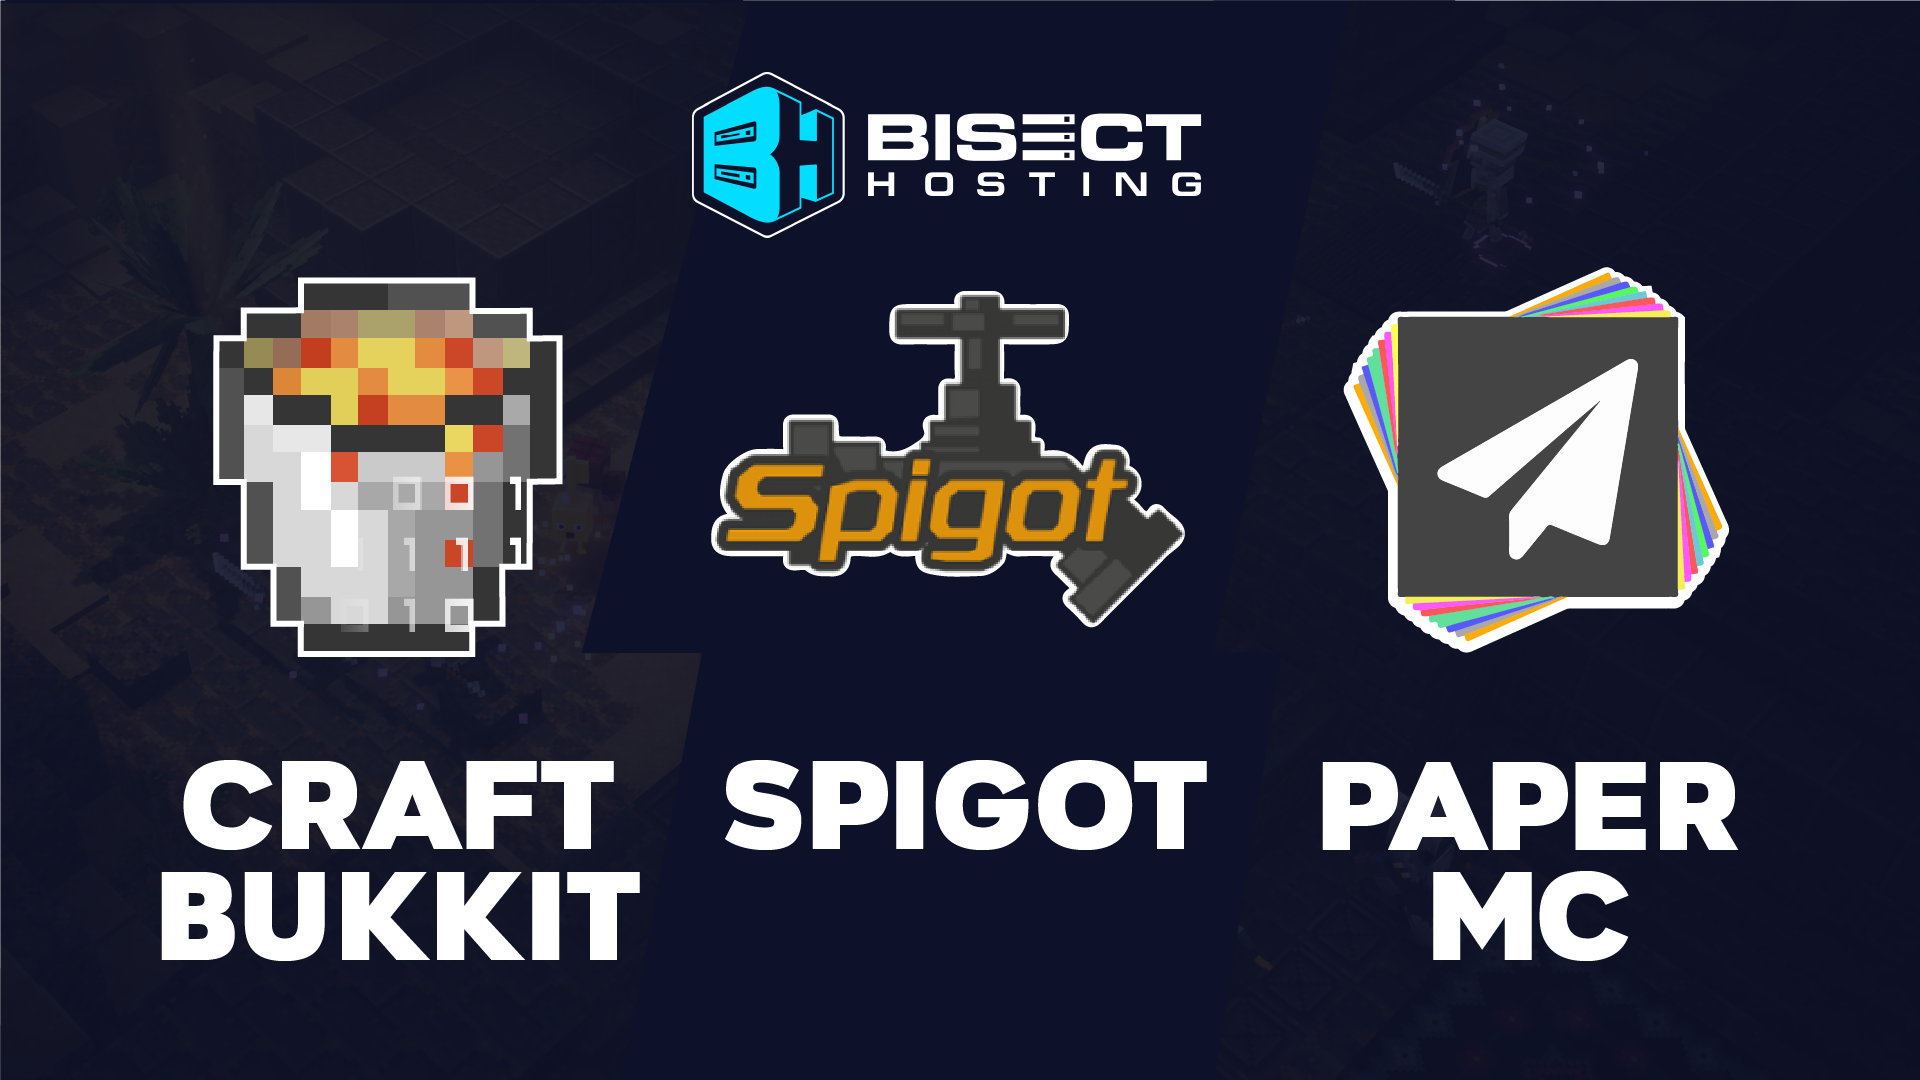 CraftBukkit vs Spigot vs Paper - BisectHosting Blog